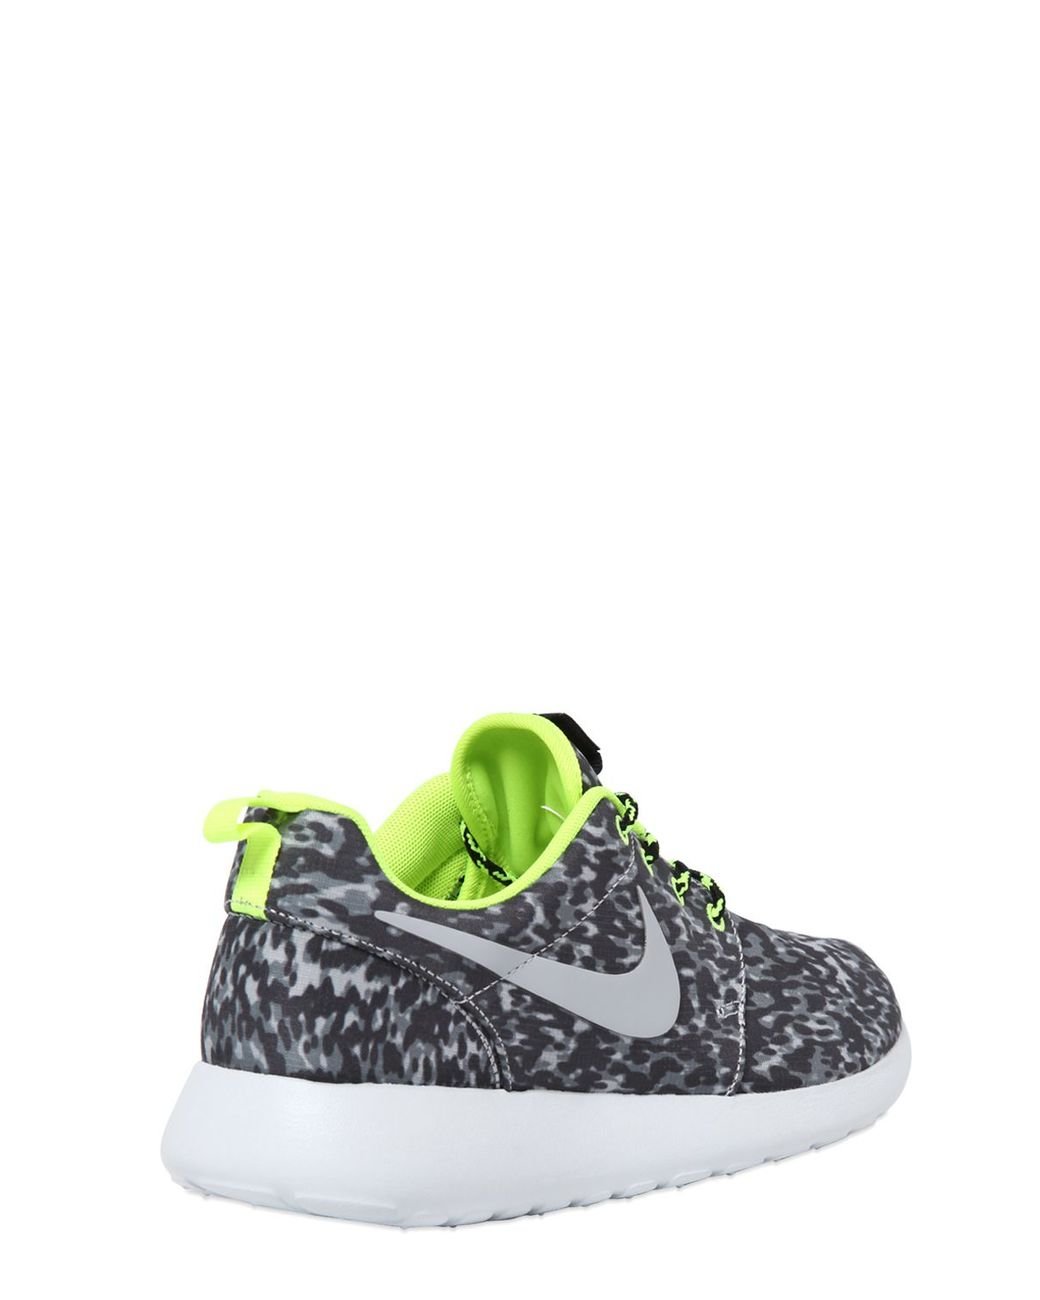 Nike Roshe Run Leopard Print Running Sneakers in Cool Grey (Gray) | Lyst